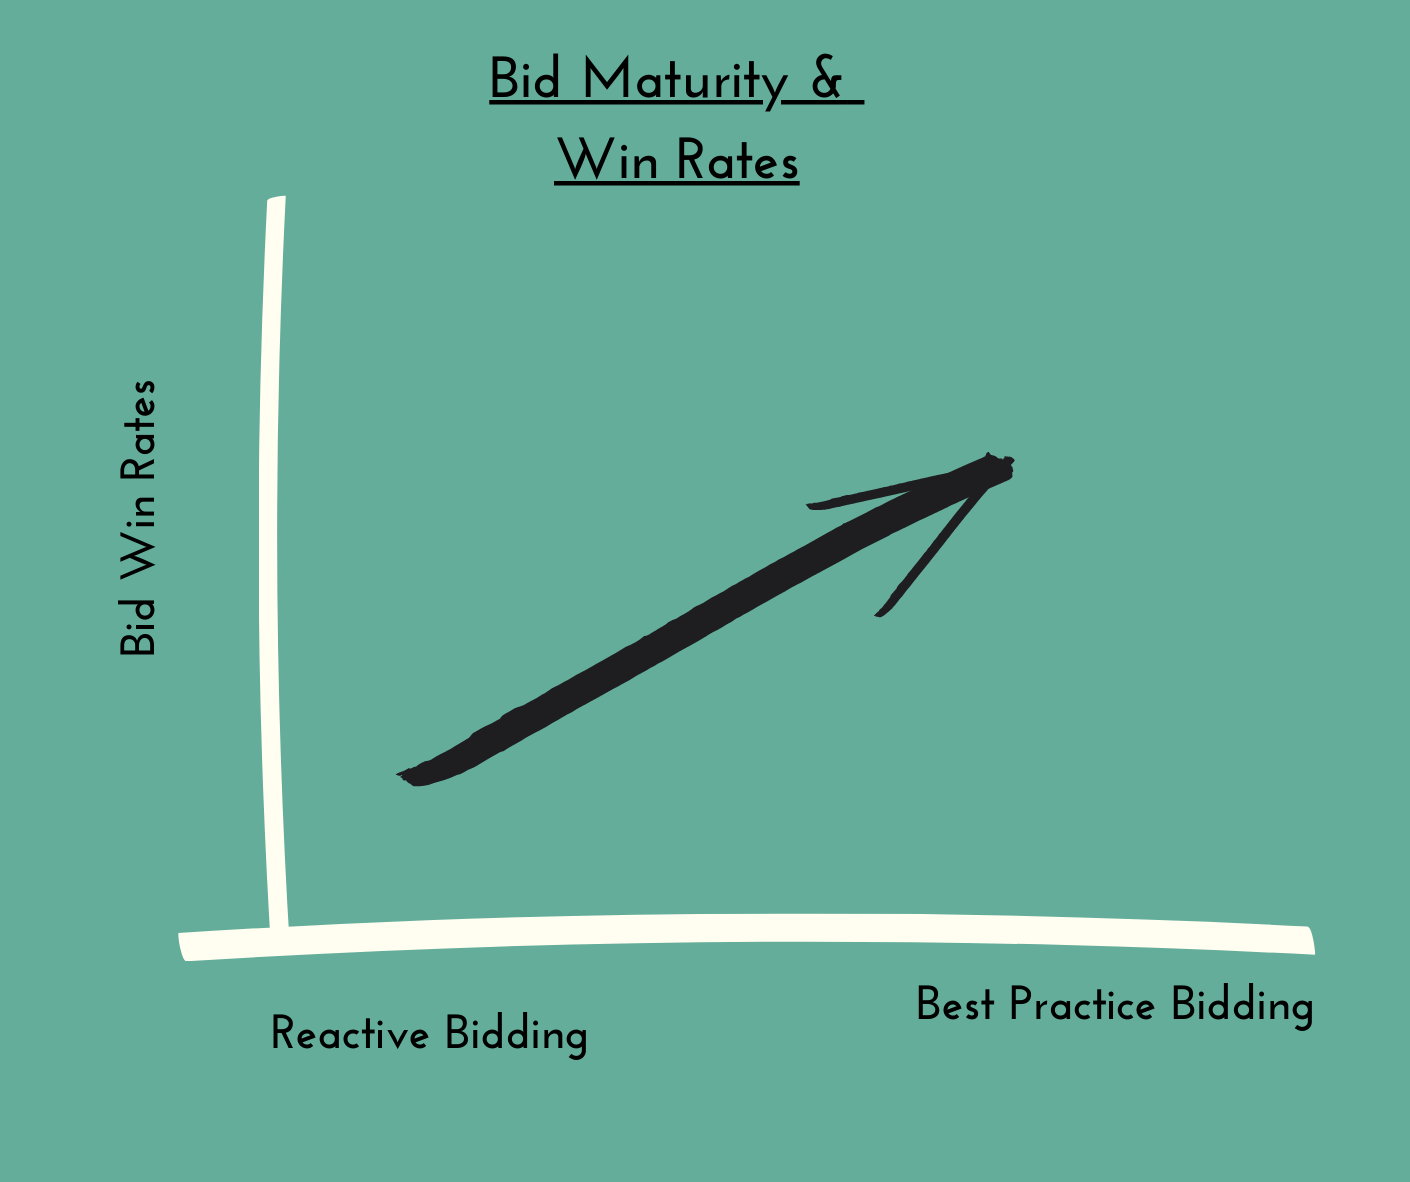 Bid maturity and win rates